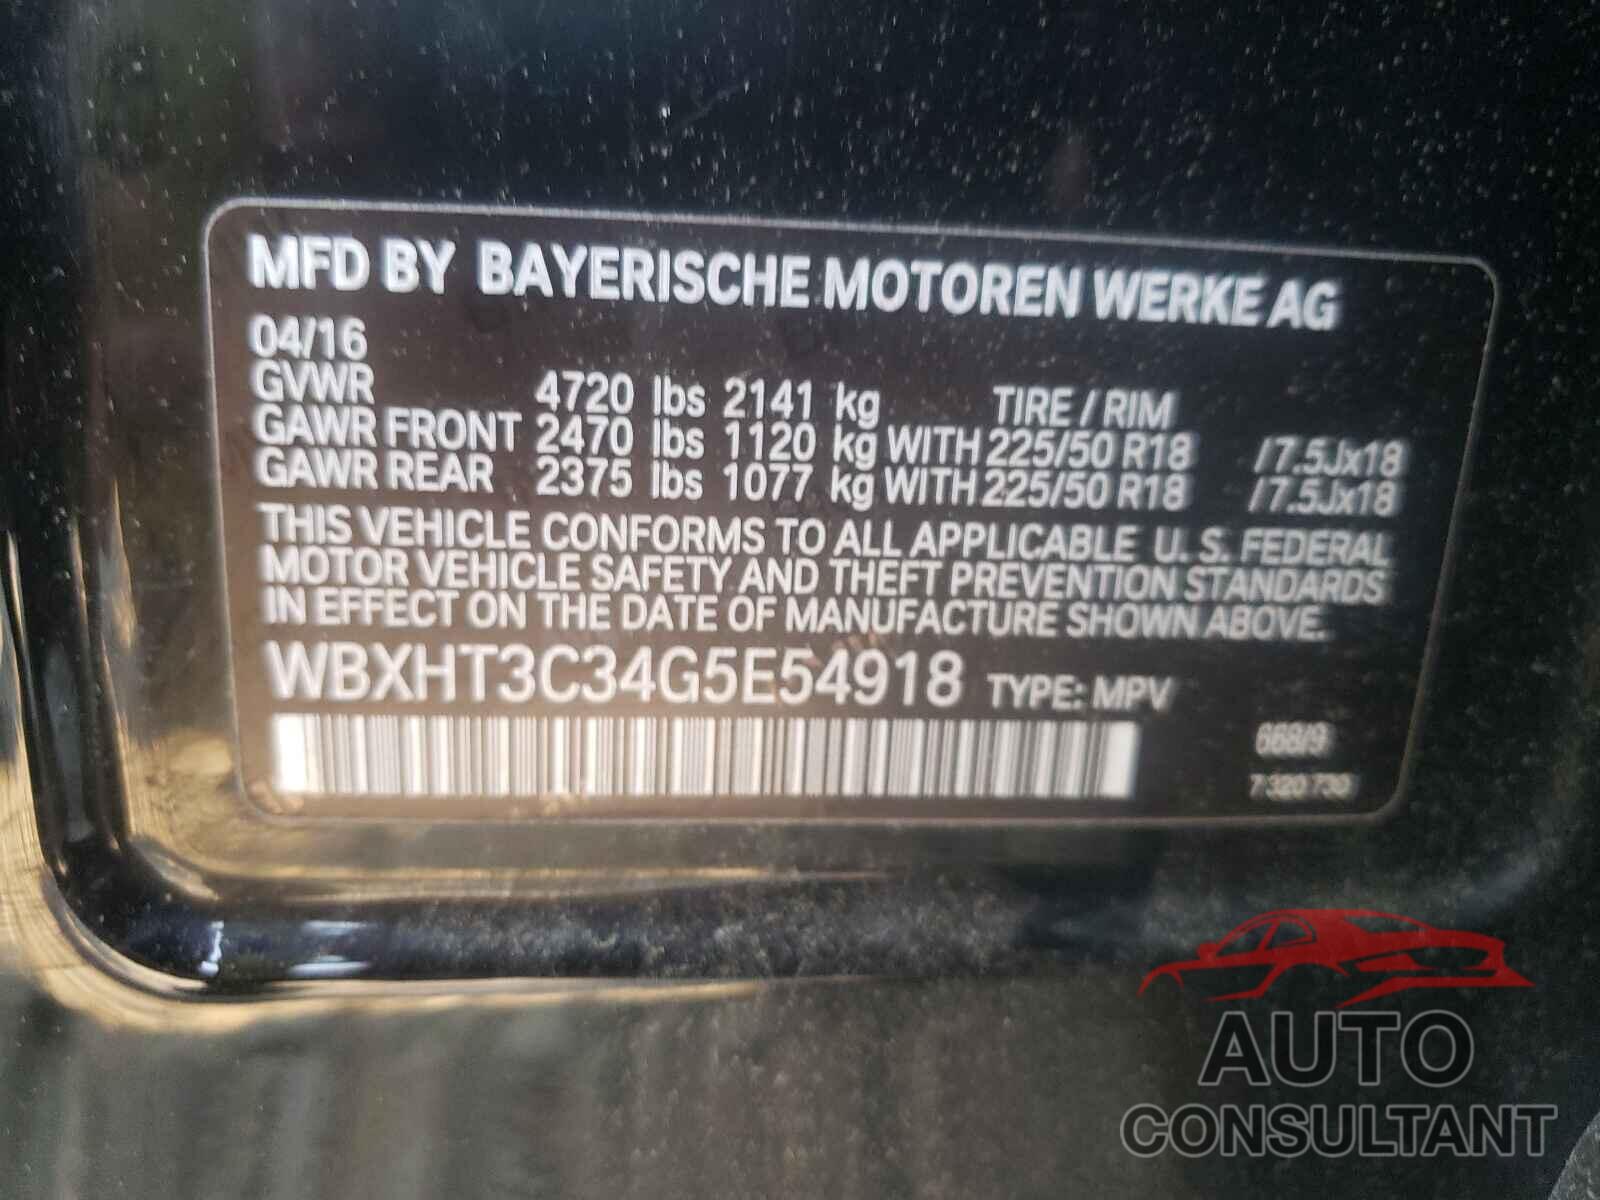 BMW X1 2016 - WBXHT3C34G5E54918